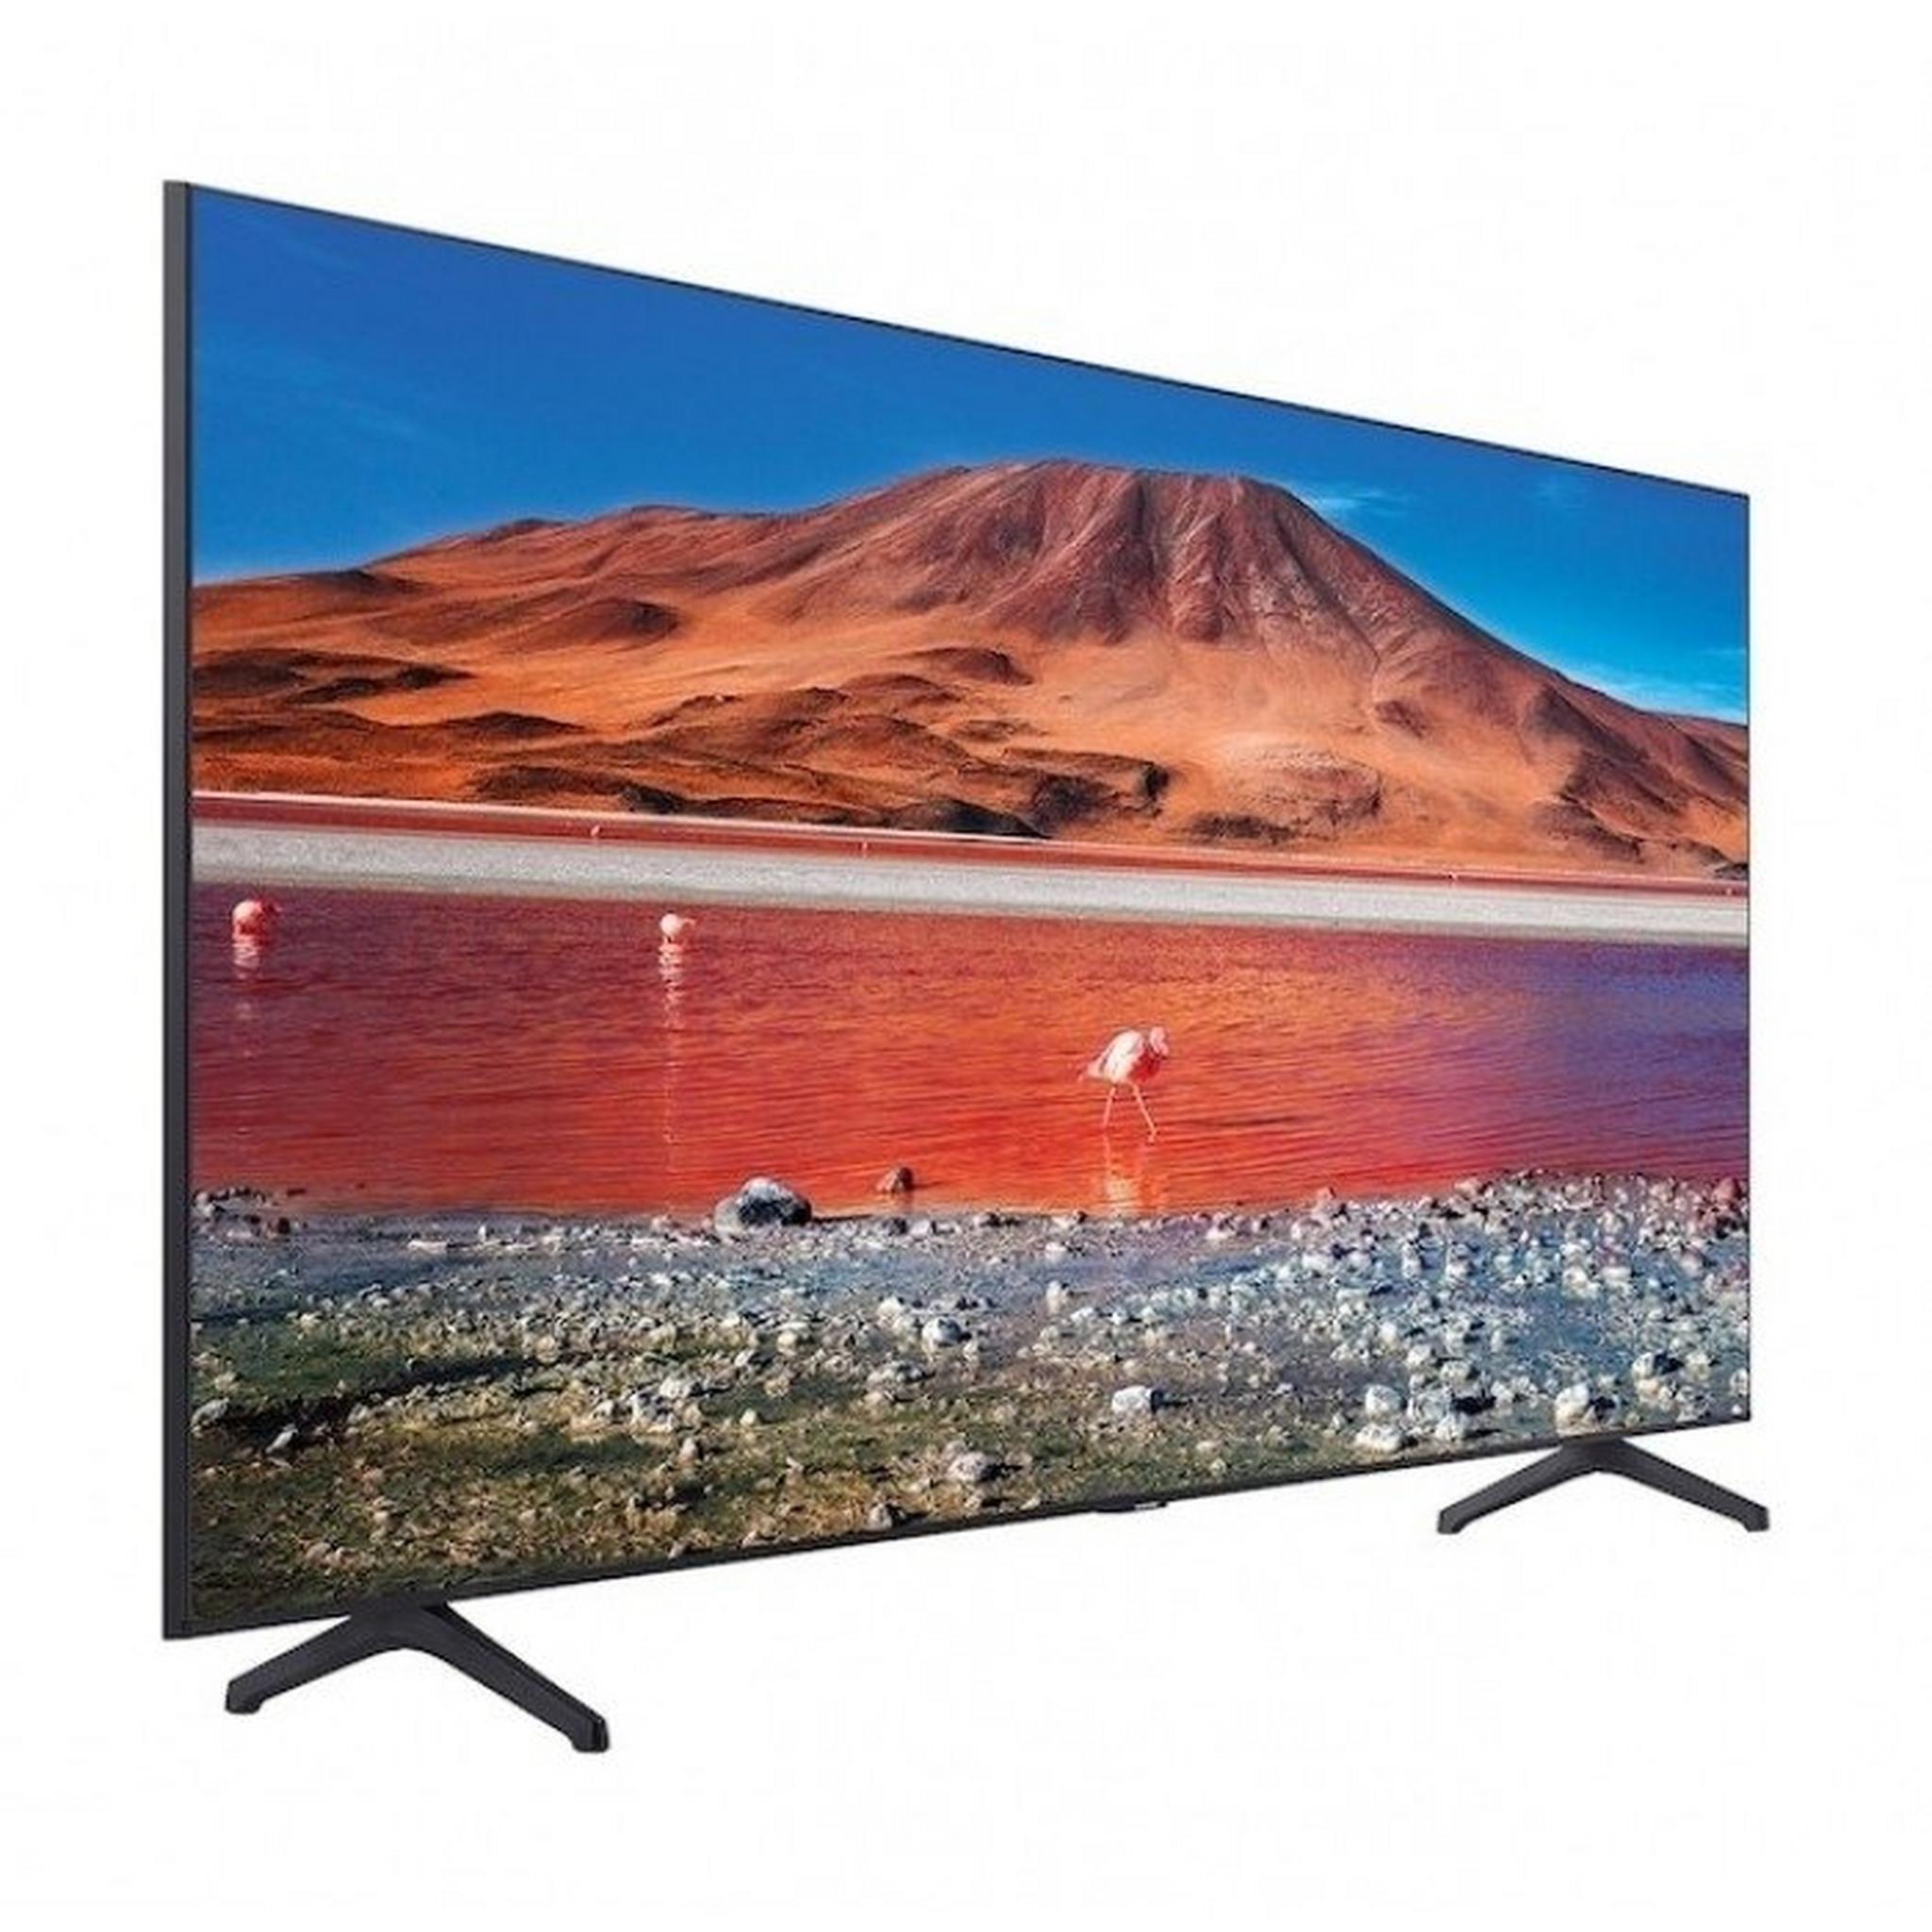 Samsung 70-inch UHD 4K Smart LED TV (UA70TU7000)